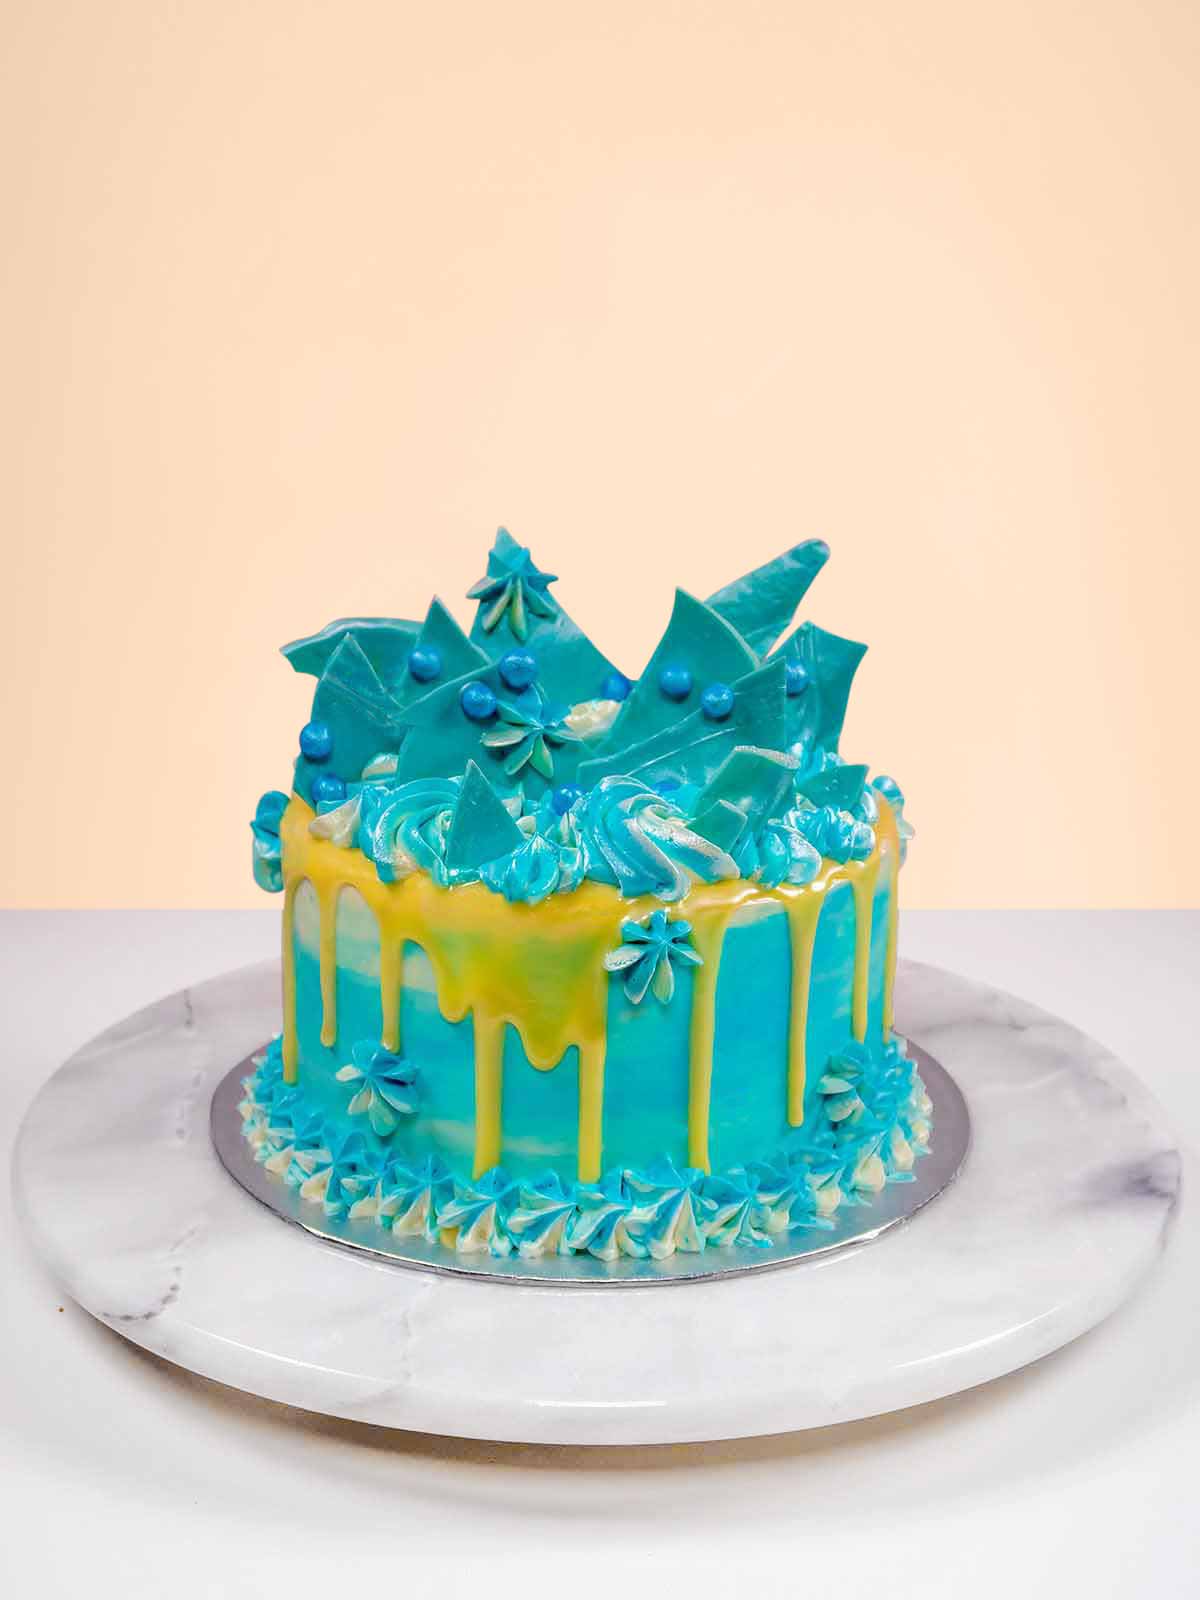 Drip frozen cake - Decorated Cake by Dadka Cakes - CakesDecor